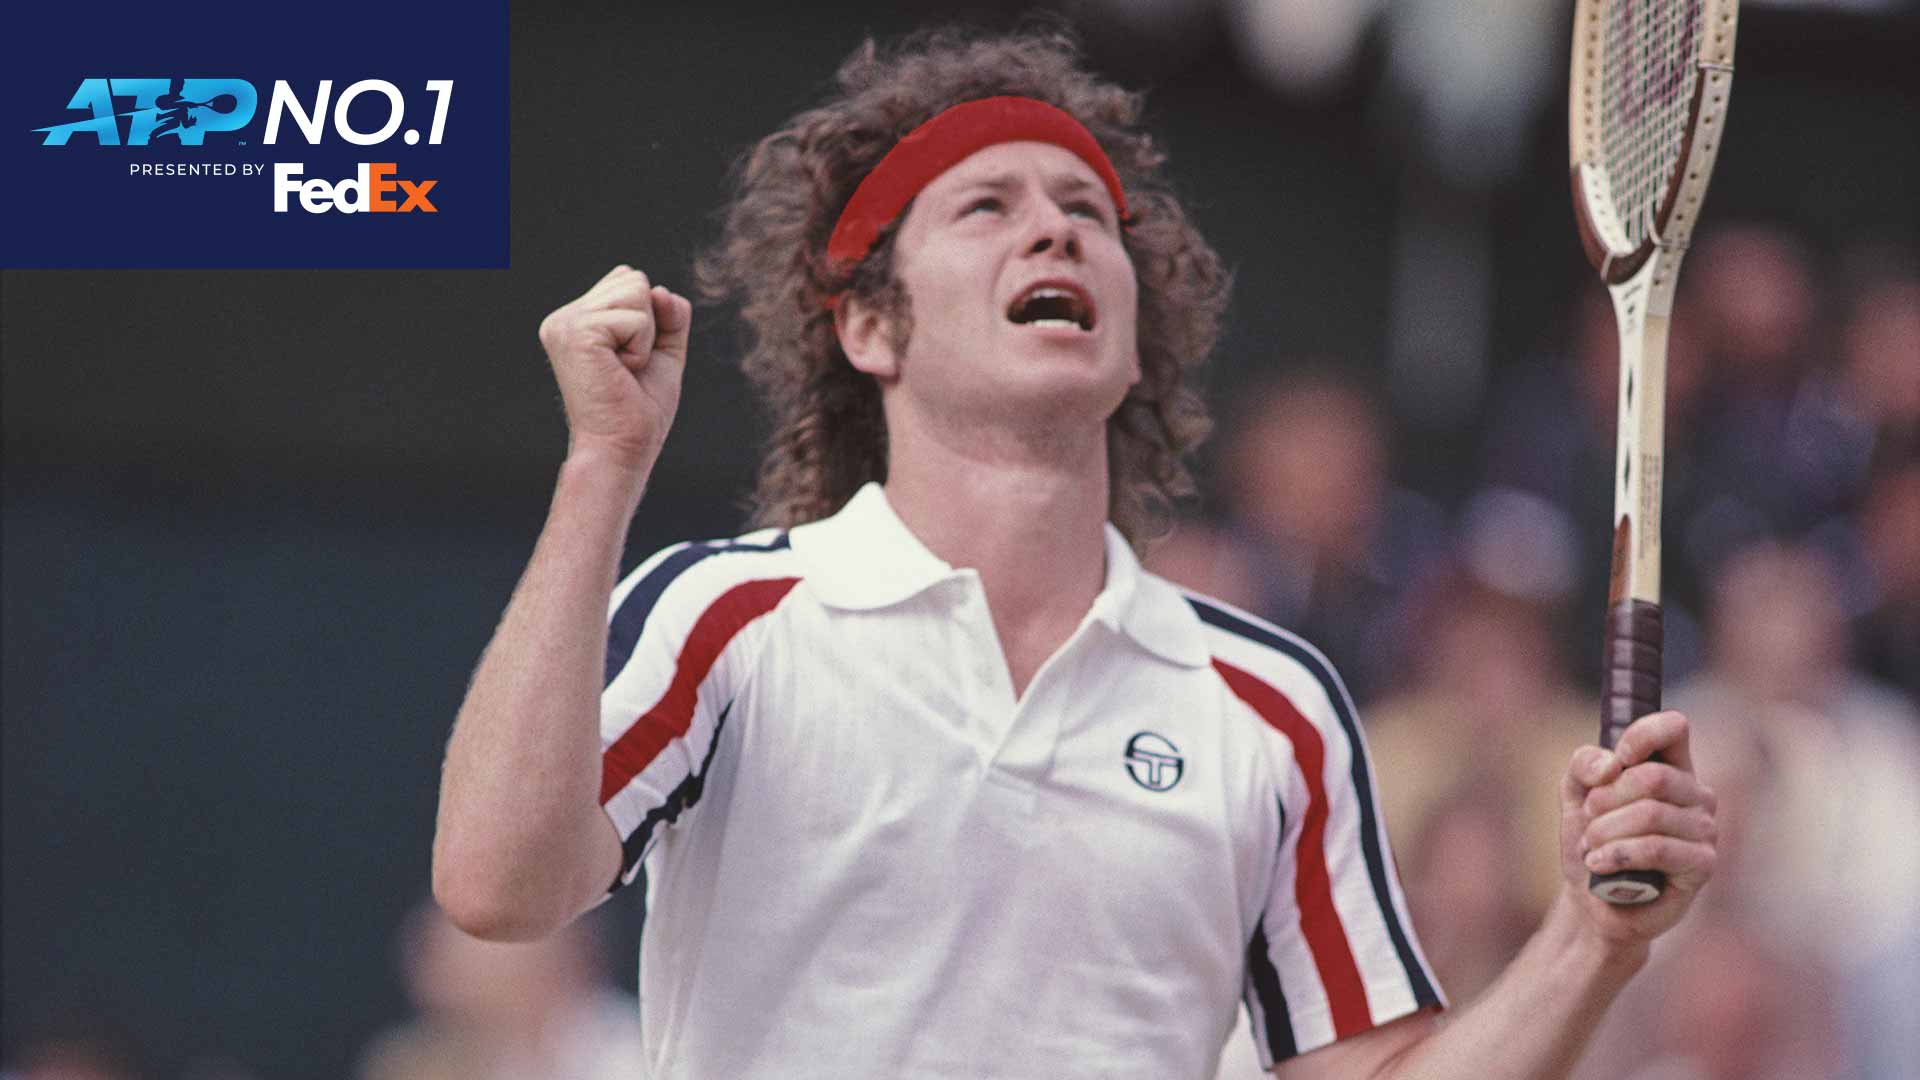 El estadounidense John McEnroe ha sido el quinto jugador en ascender al número 1 en la historia del ranking.